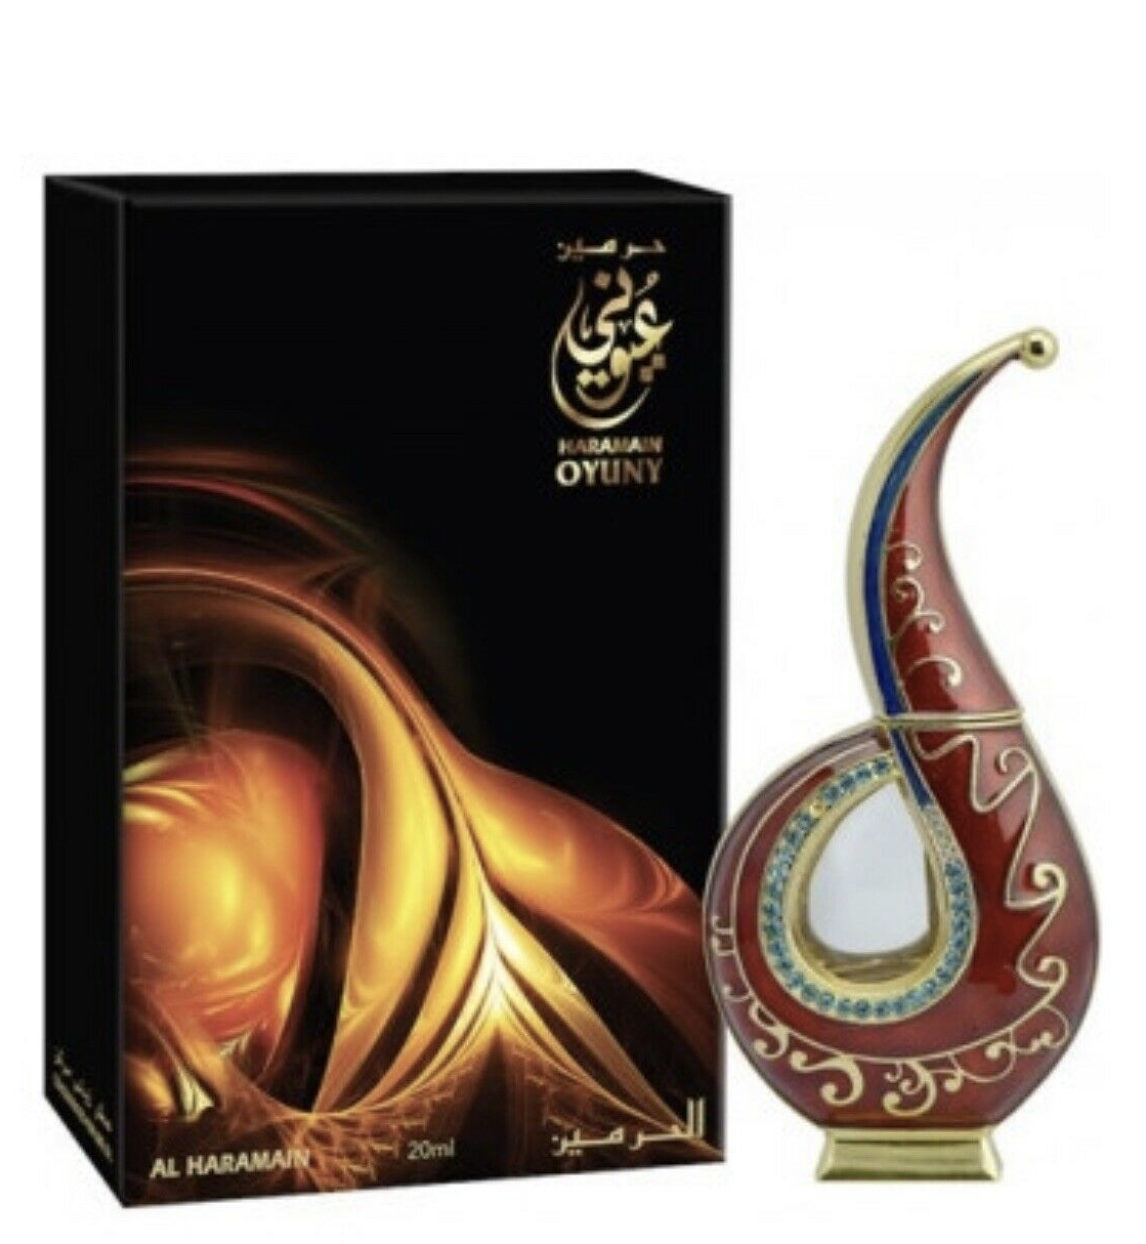 Oyuny By Al Haramain 20 ML Attar Oil Based Concentrated Perfume - USA SELLER.